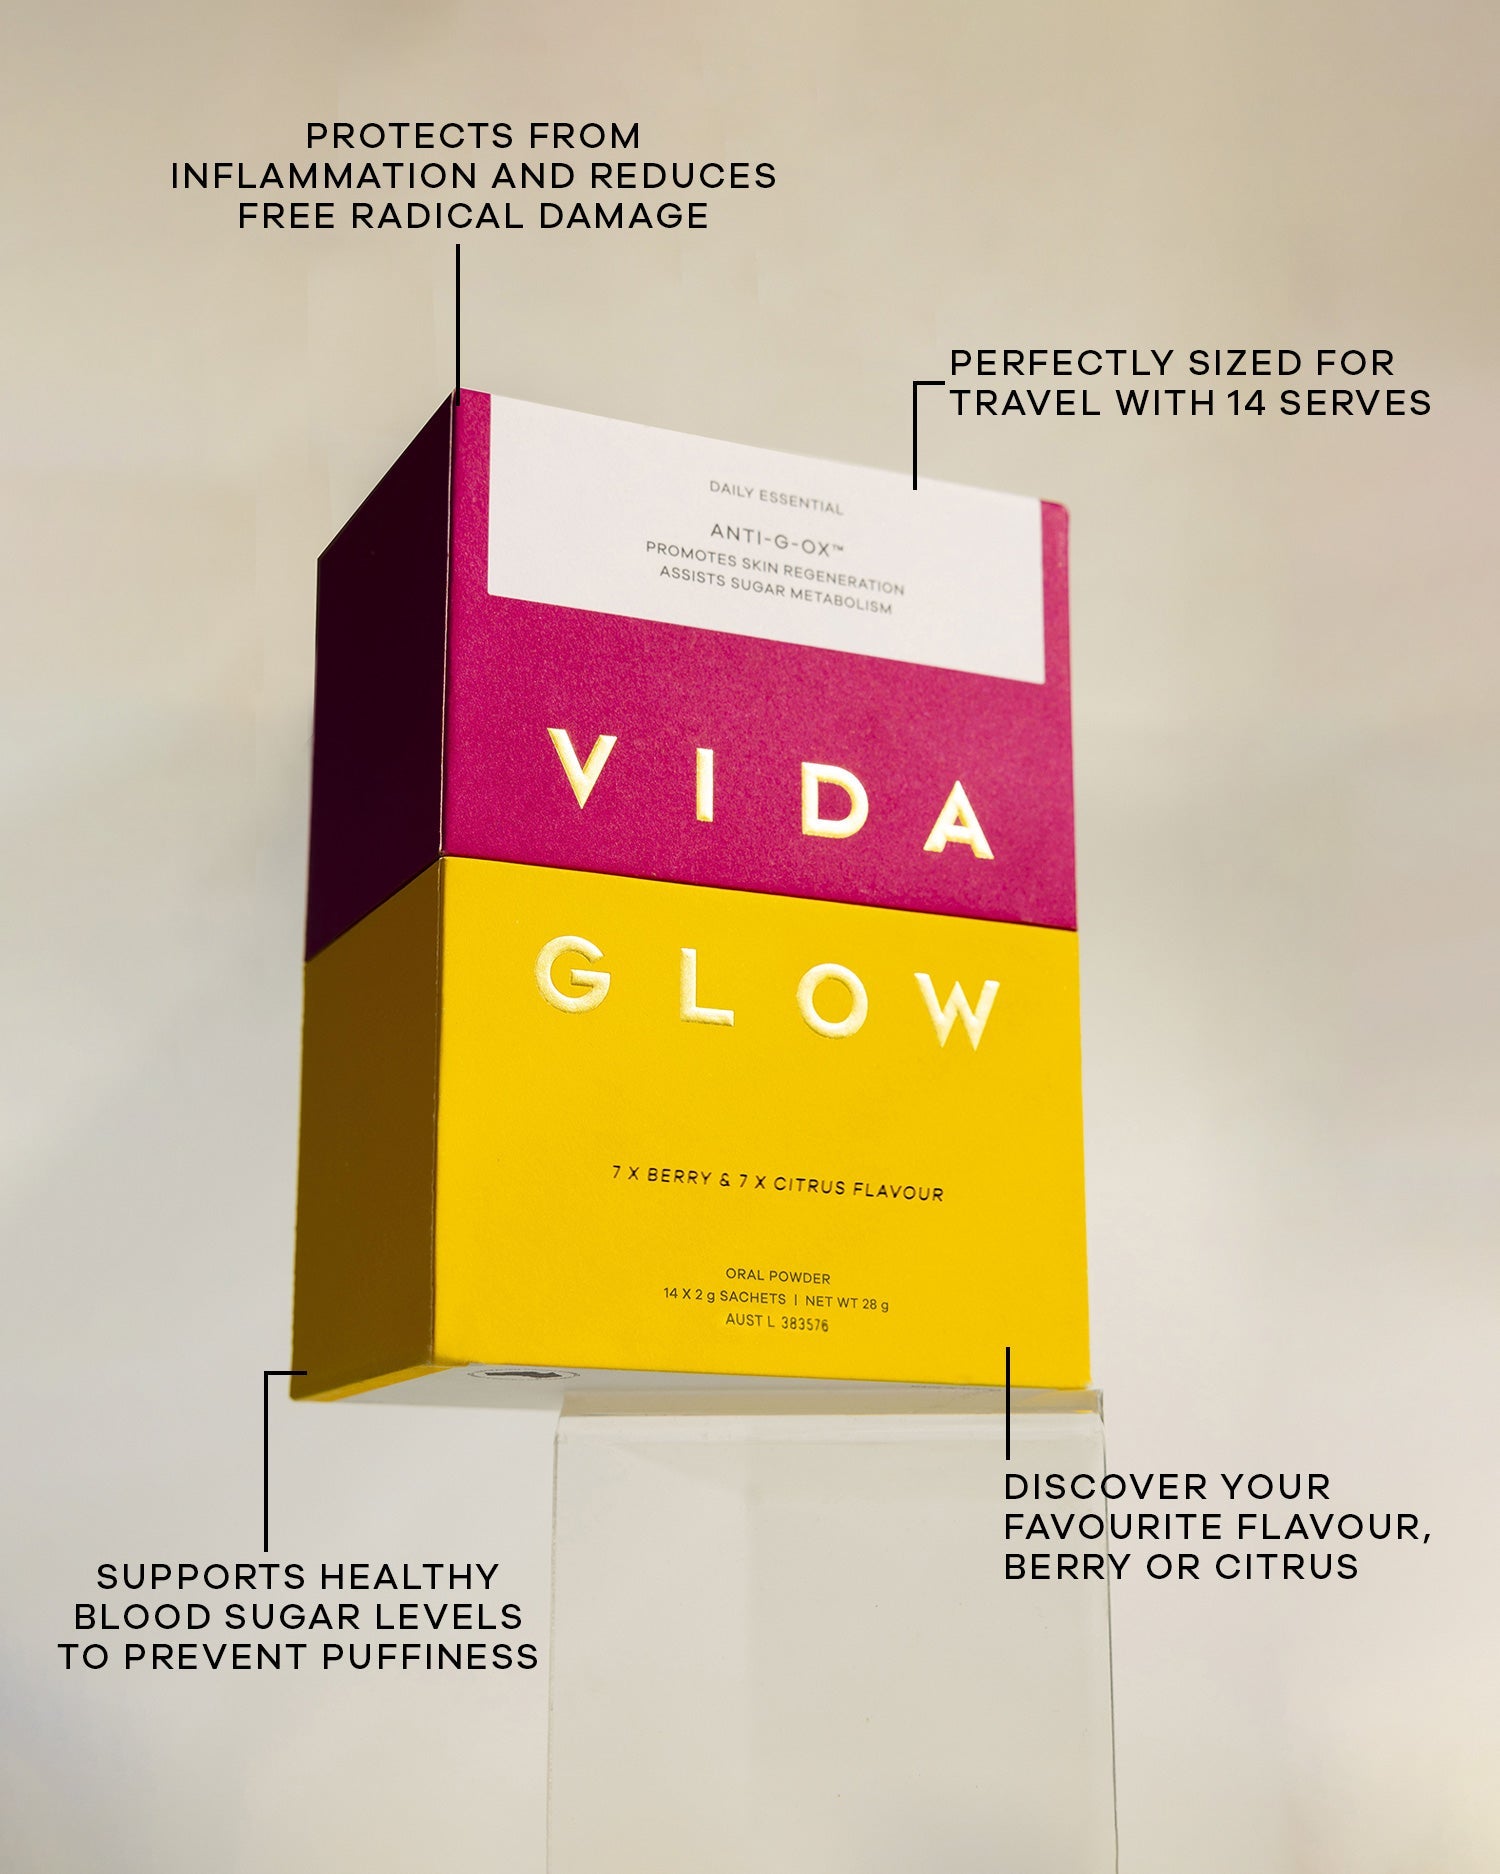 Vida Glow Anti-G-Ox Mixed Trial Pack 14 Serves